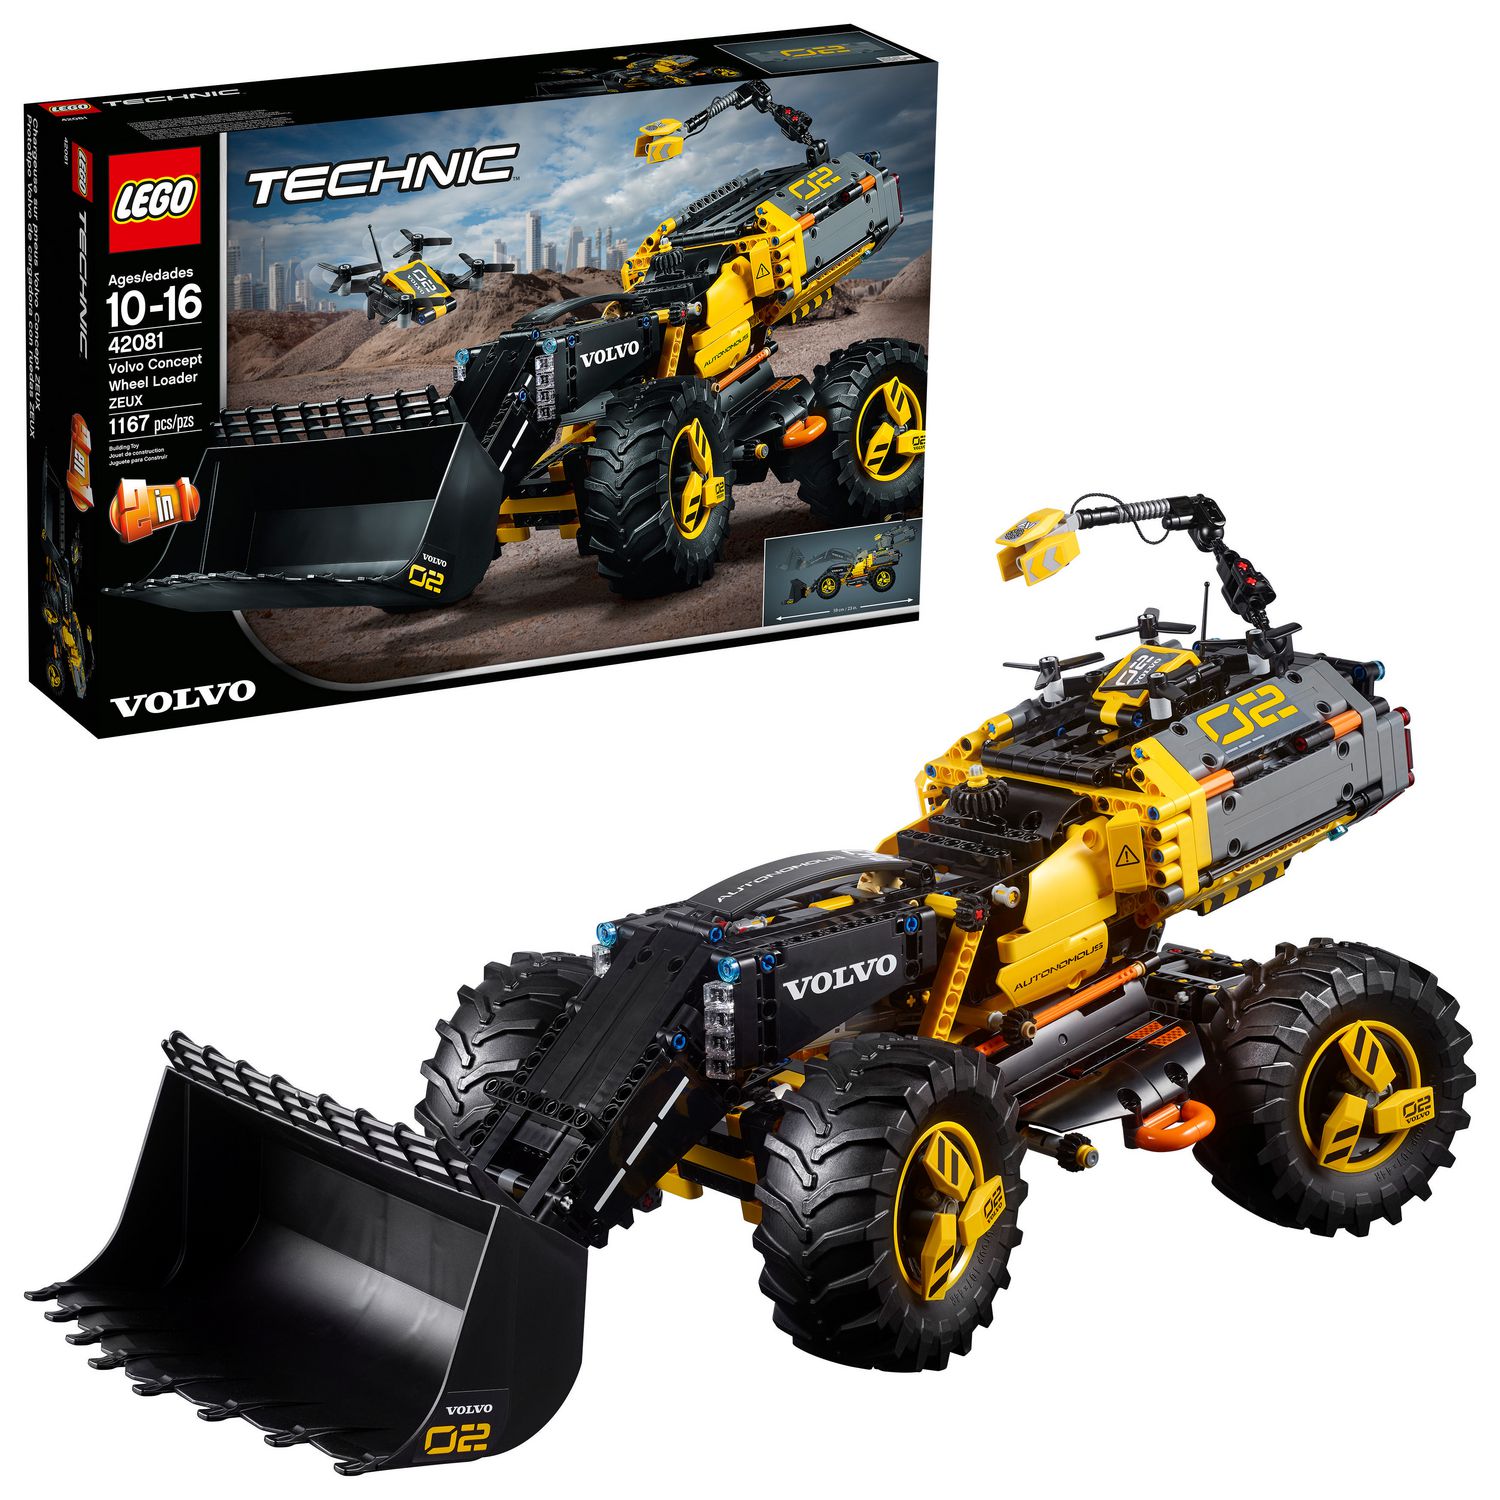 LEGO Technic Volvo Concept Wheel Loader ZEUX 42081 Building Kit (1167 Piece)